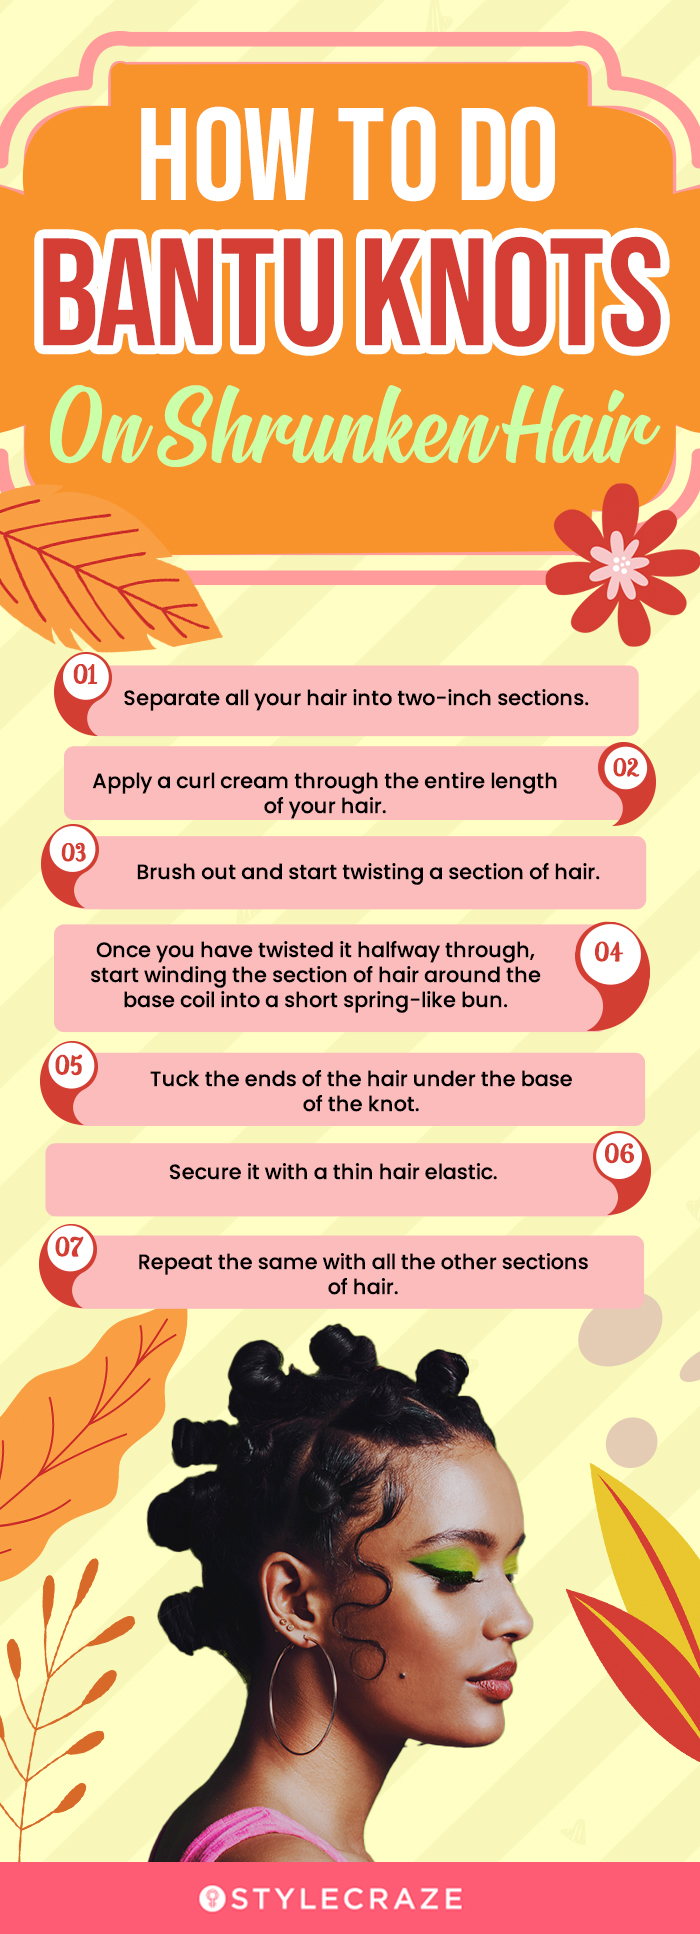 how to do bantu knots on shrunken hair (infographic)